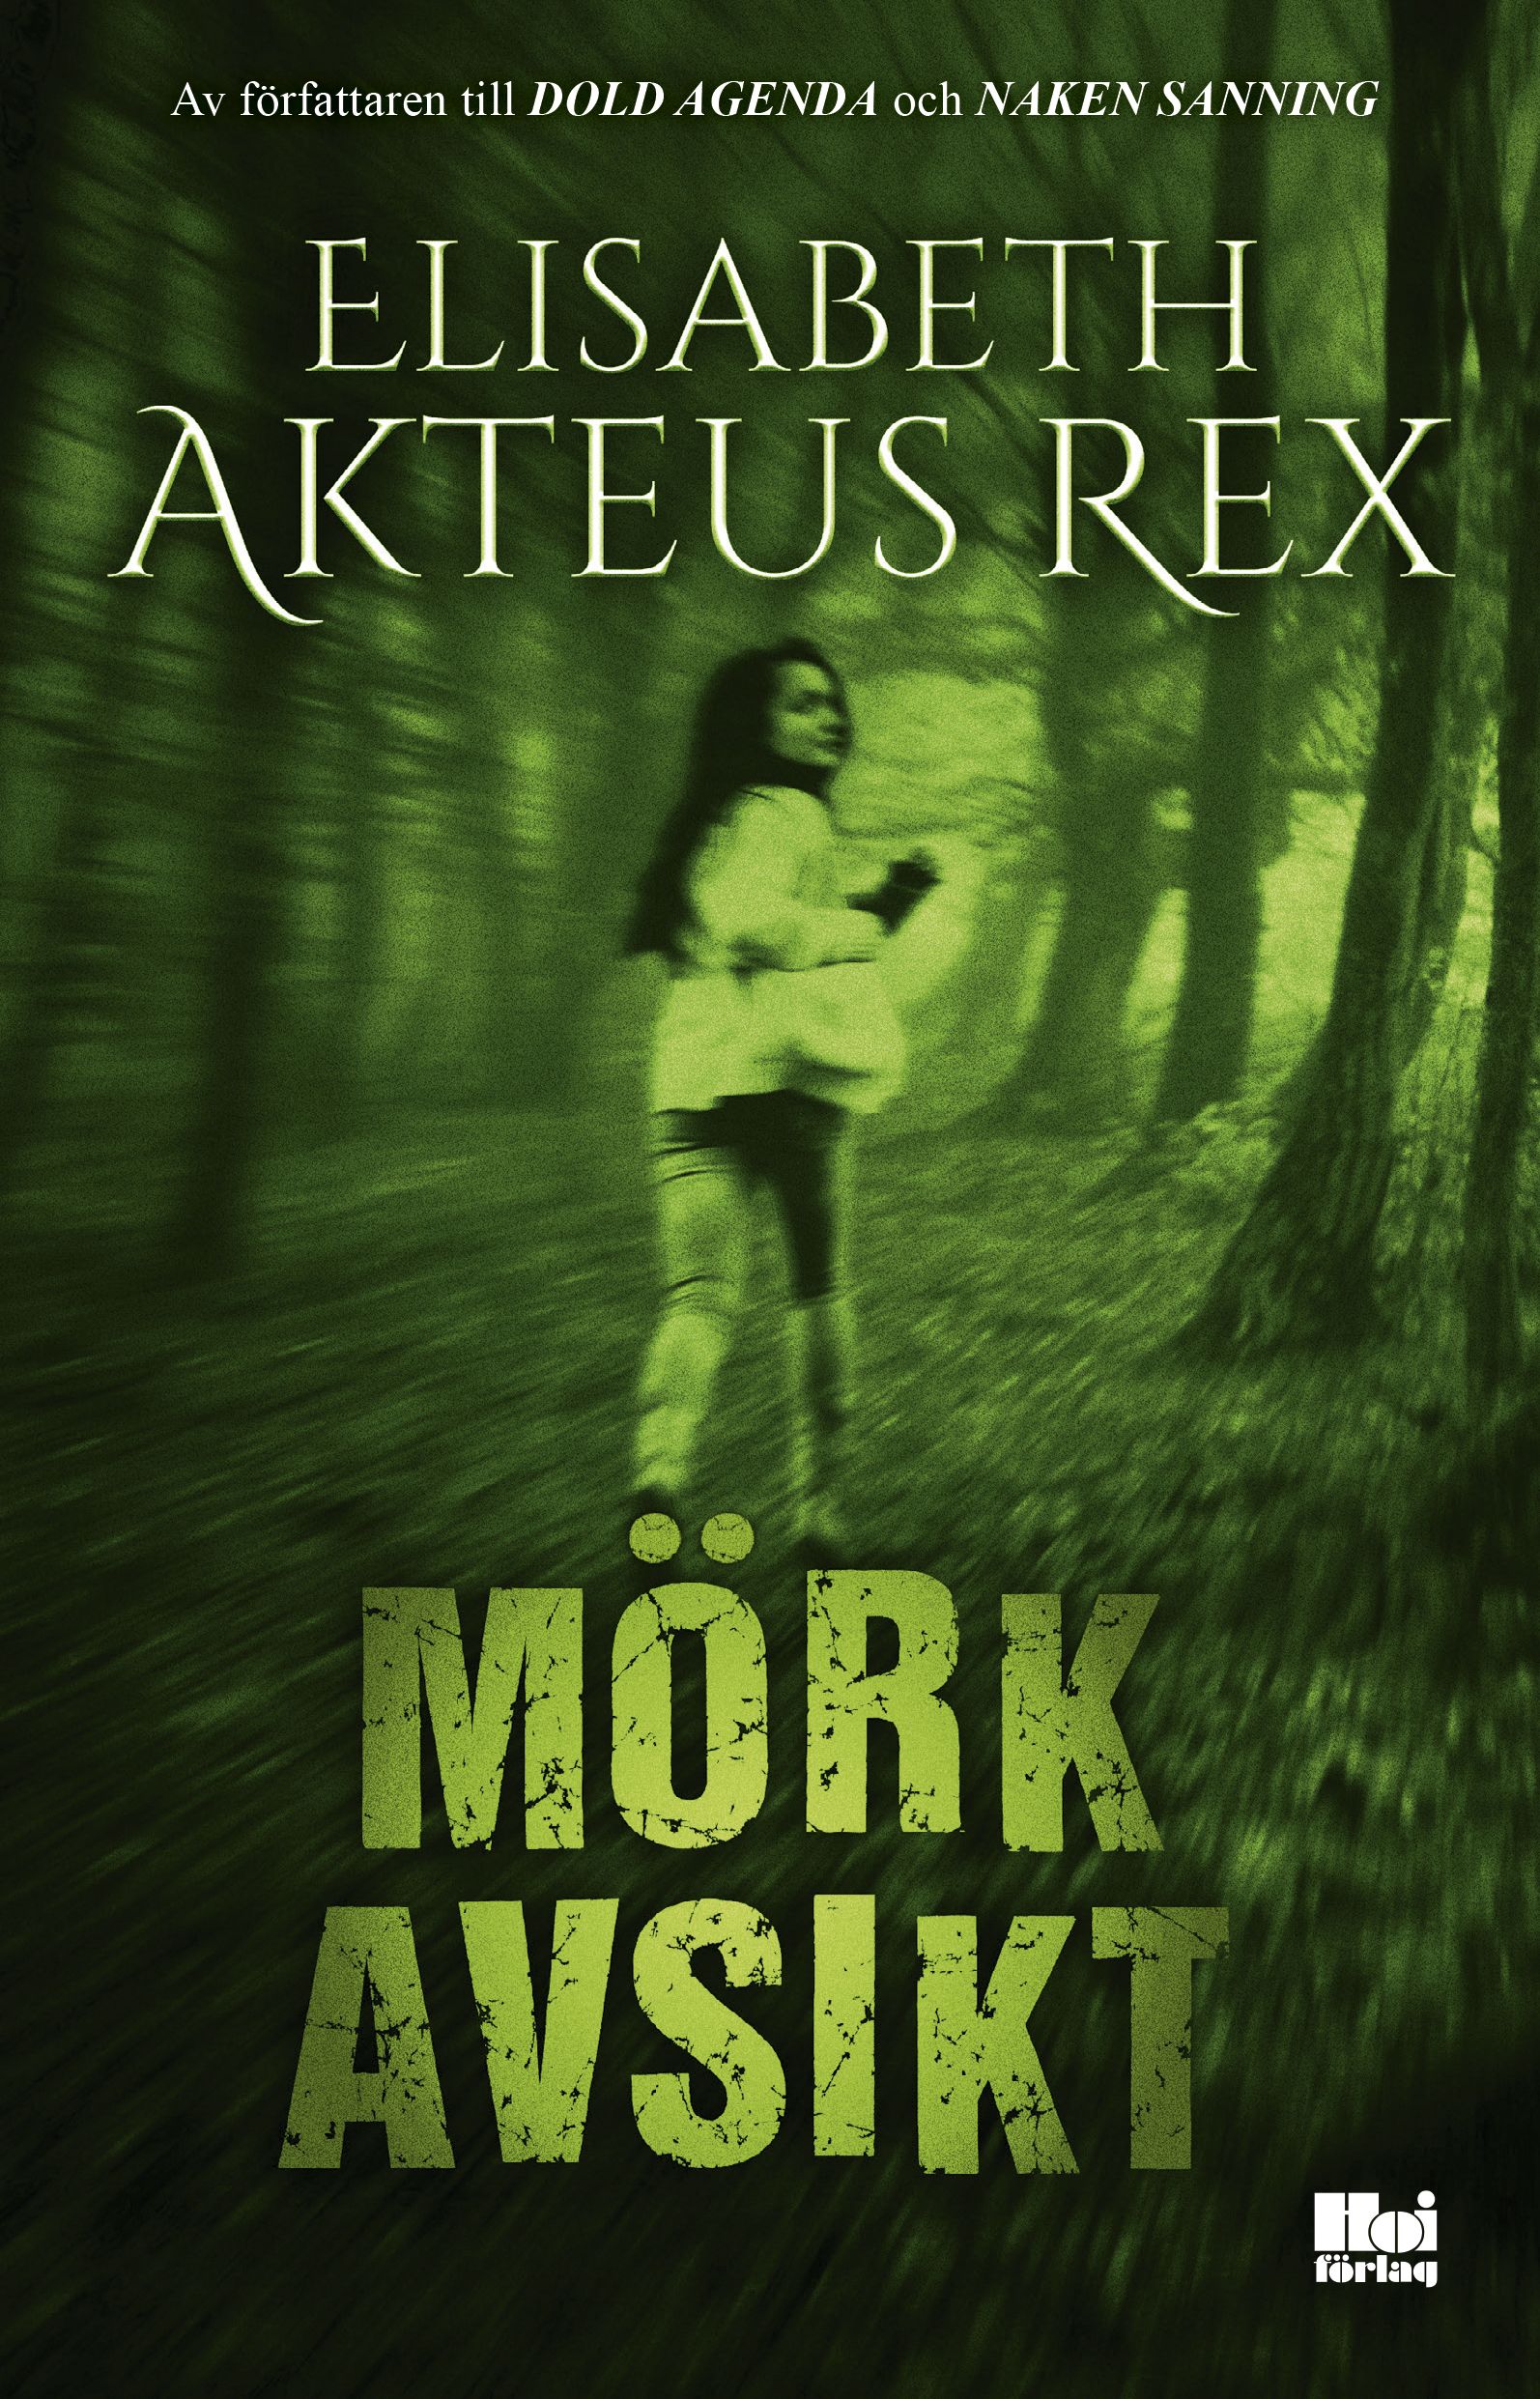 Mörk avsikt, e-bog af Elisabeth Akteus Rex